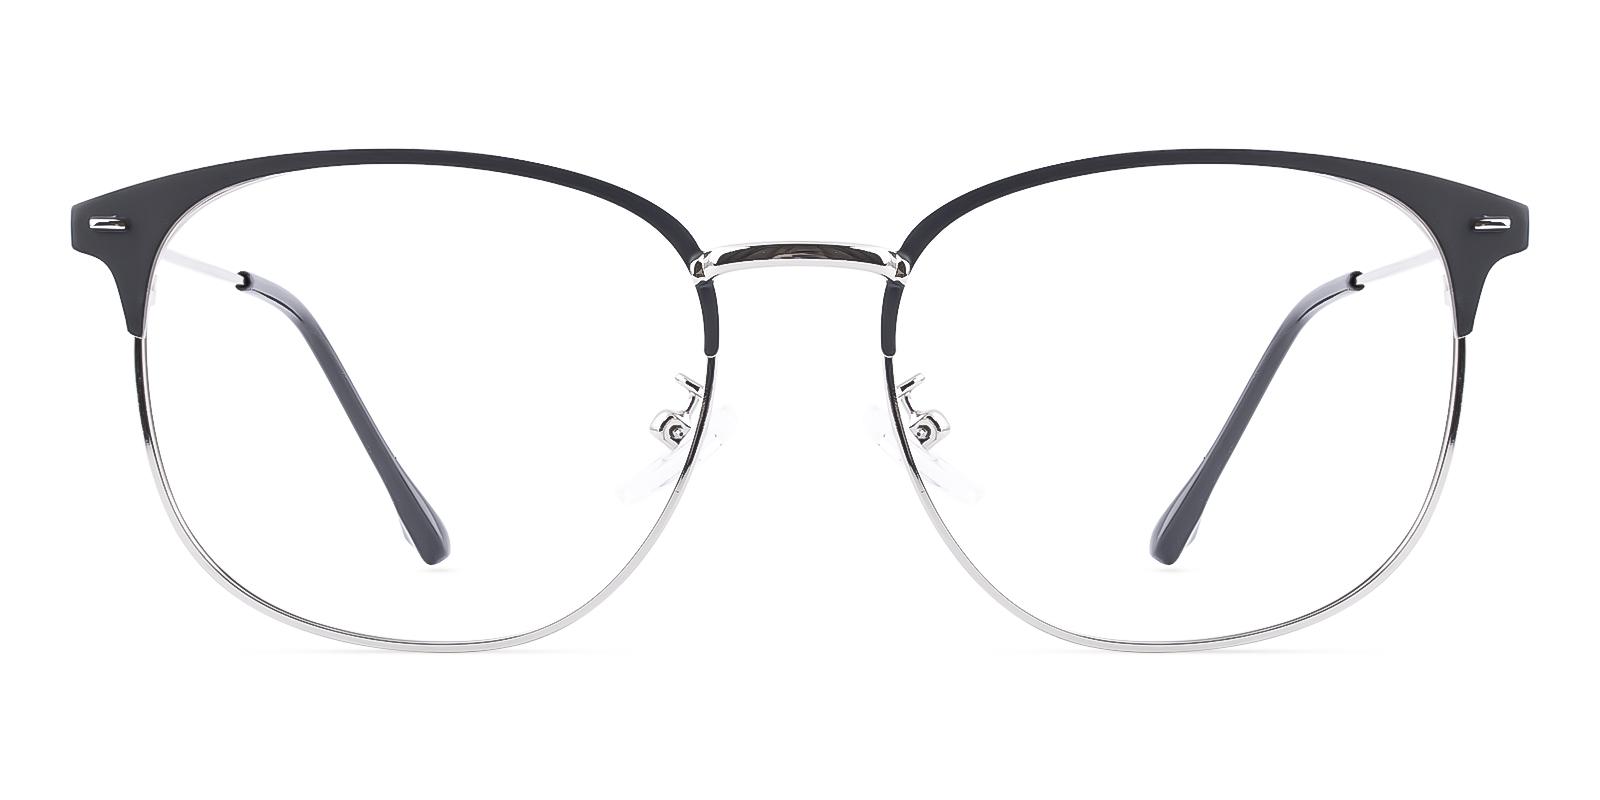 Plensure Silver Metal Eyeglasses , NosePads Frames from ABBE Glasses